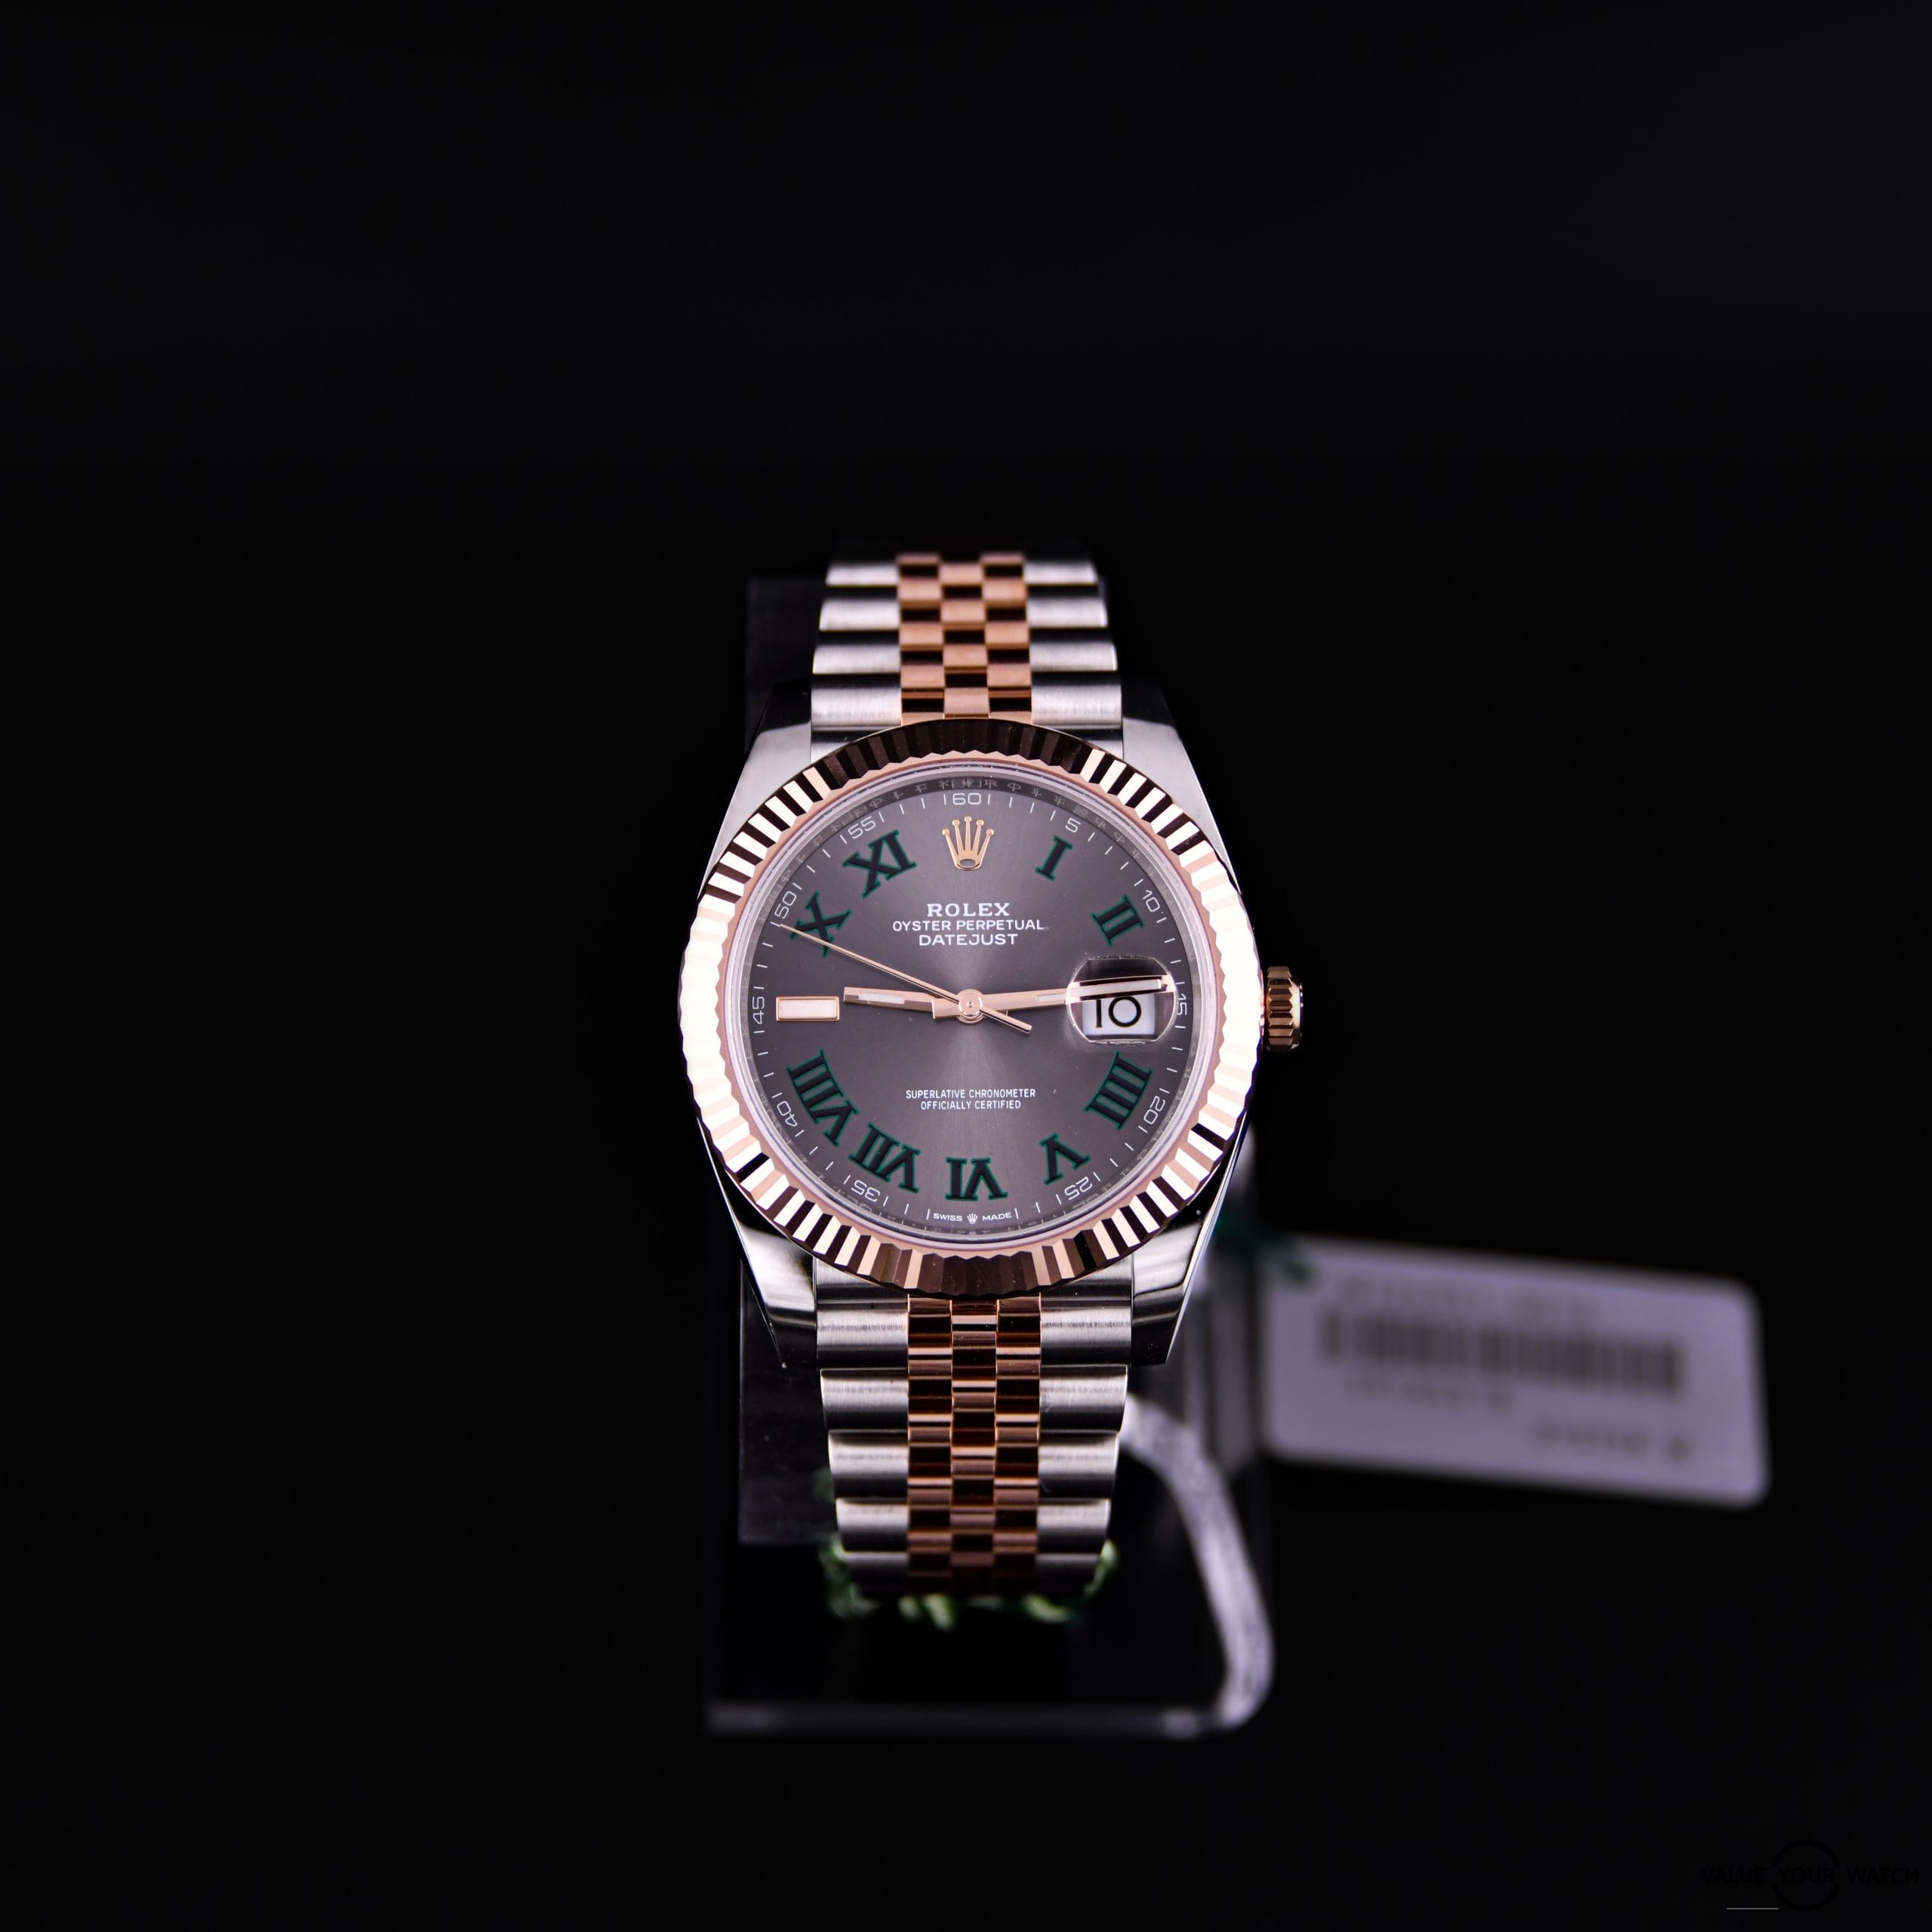 Rolex Datejust 36mm Wimbledon gold two tone jubilee bracelet grey dial green Roman numerals 126333 w/ box & papers